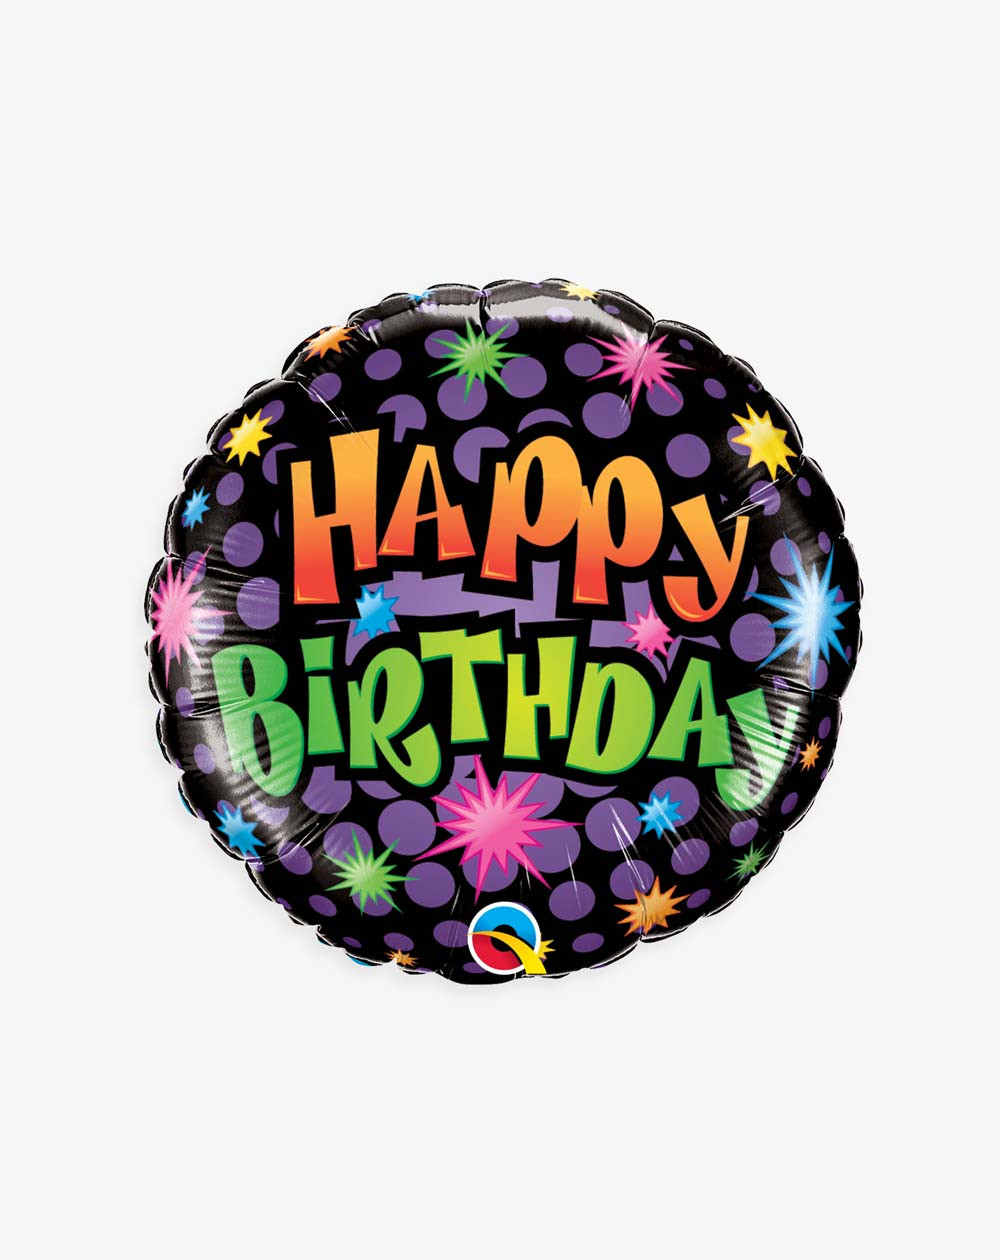 Balloon Bouquet Disco birthday - Birthday balloons for boys - Agapics